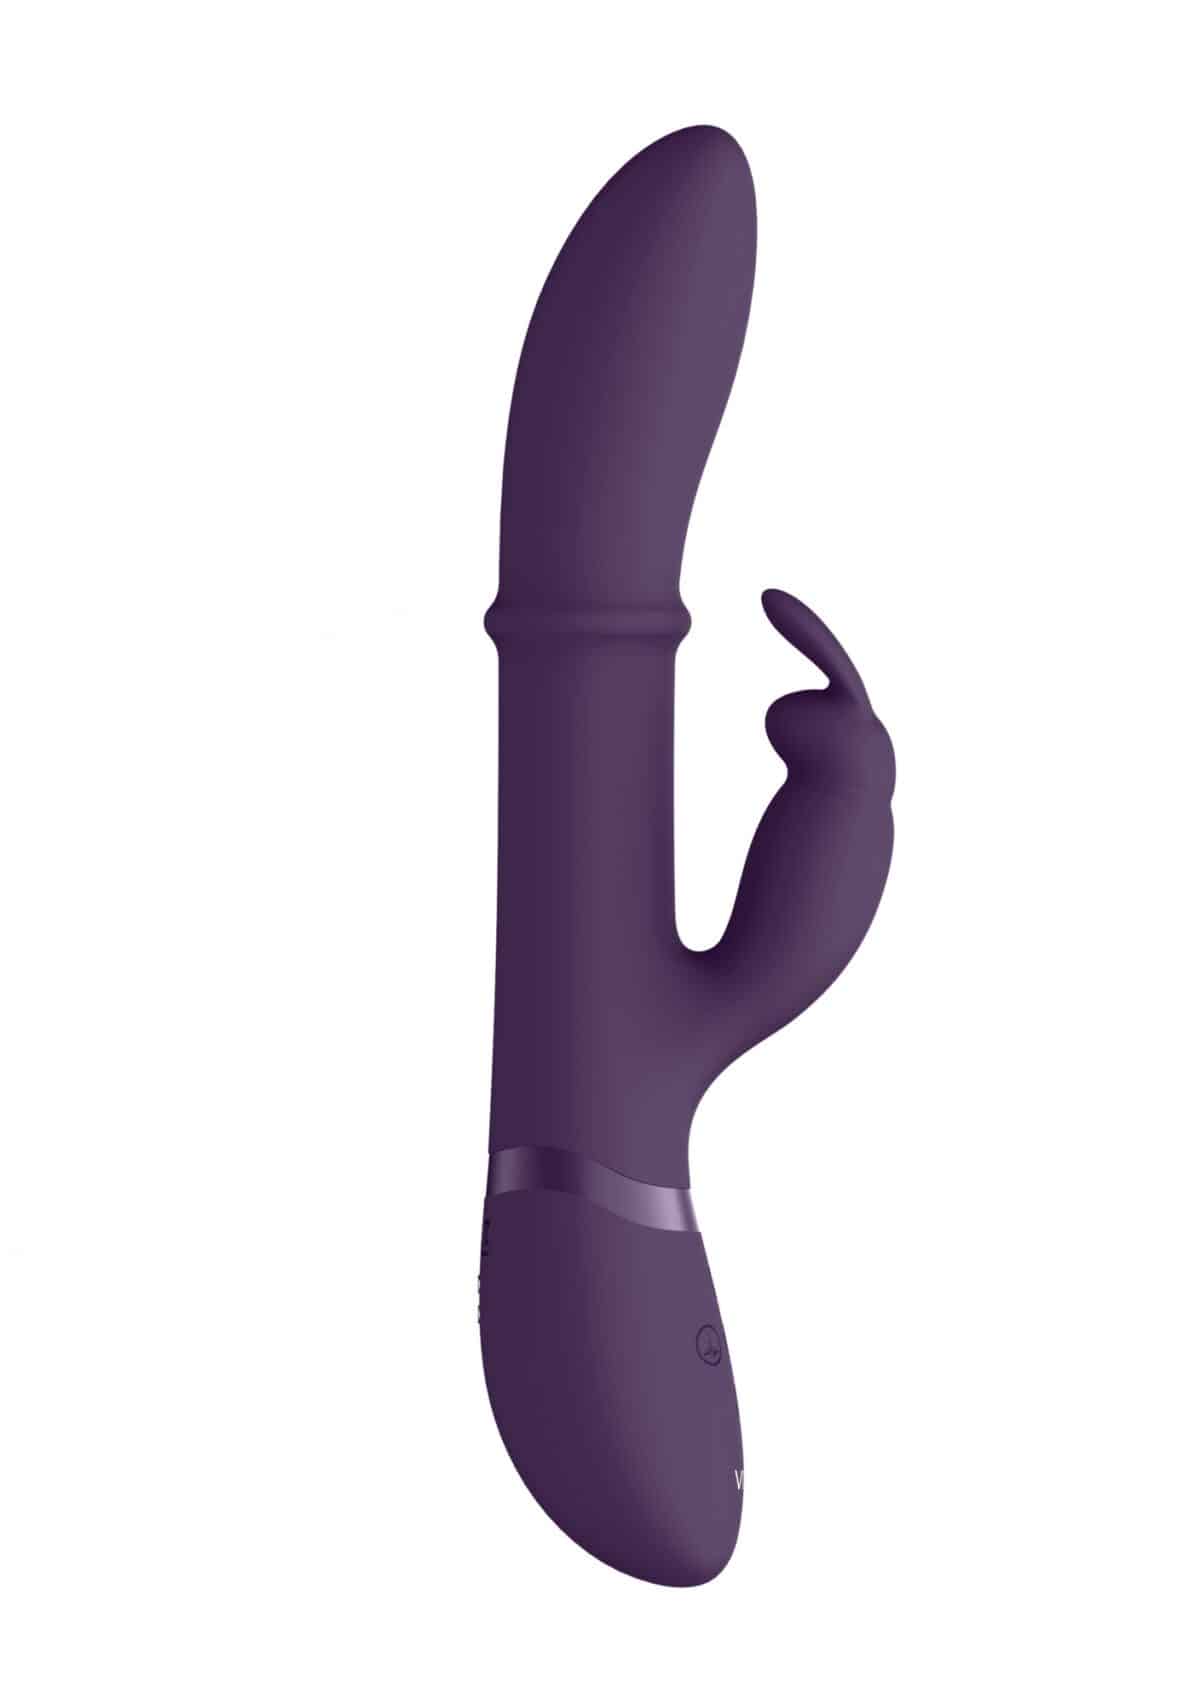 Halo Ring Rabbit Vibrator purple